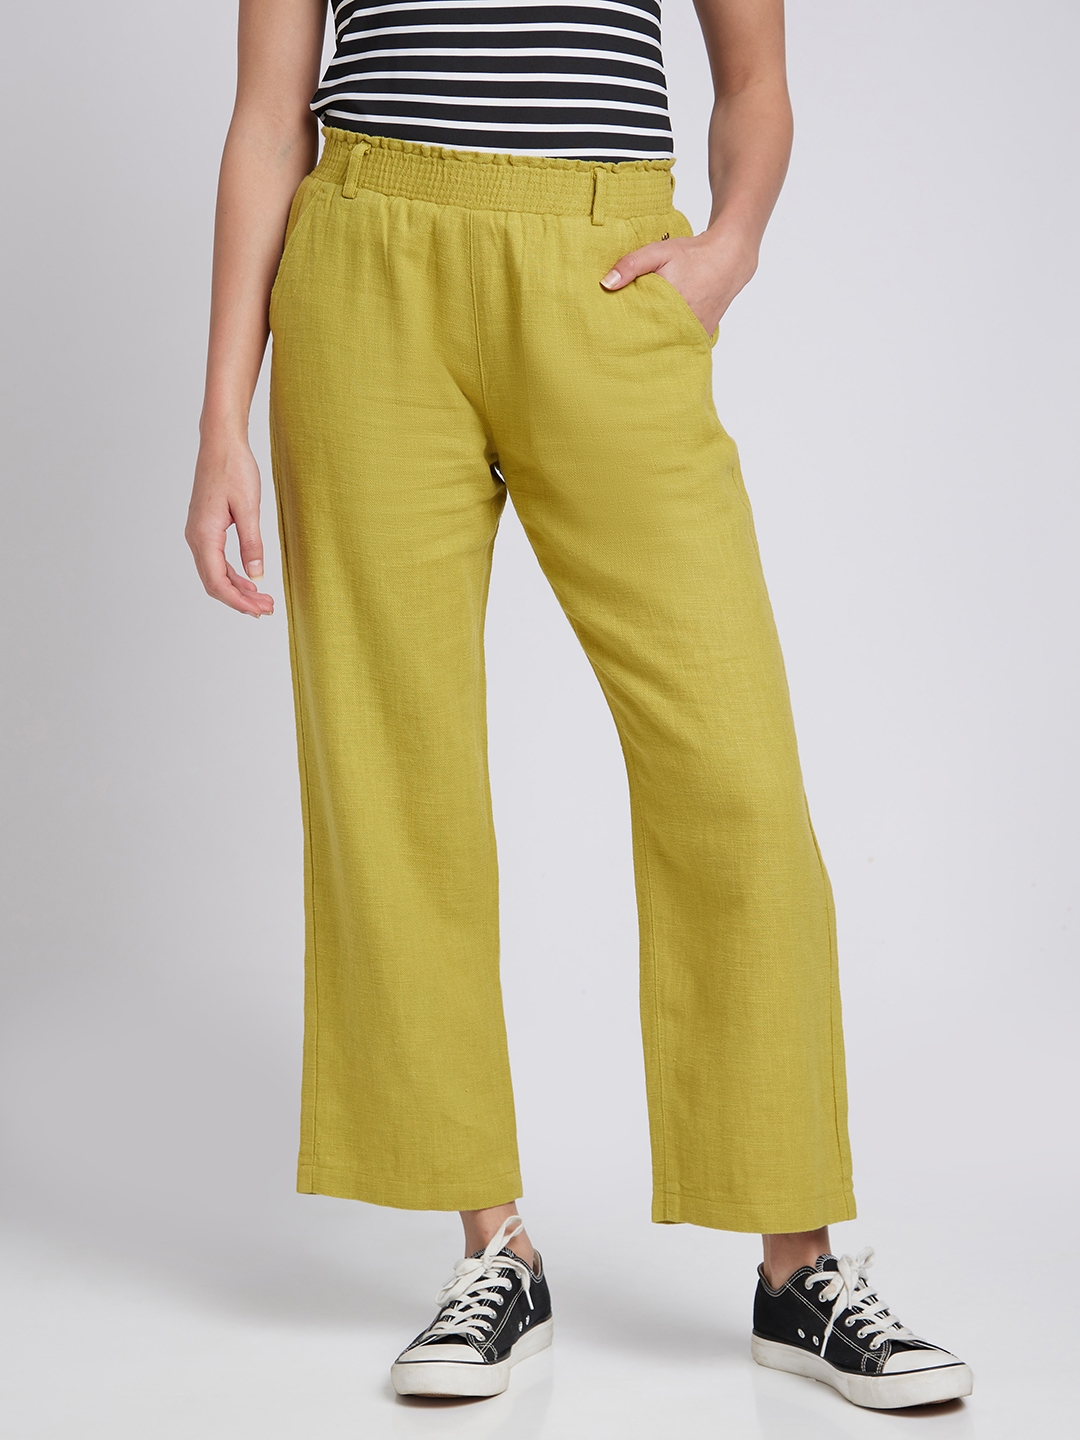 spykar | Women's Yellow Linen Solid Trousers 0